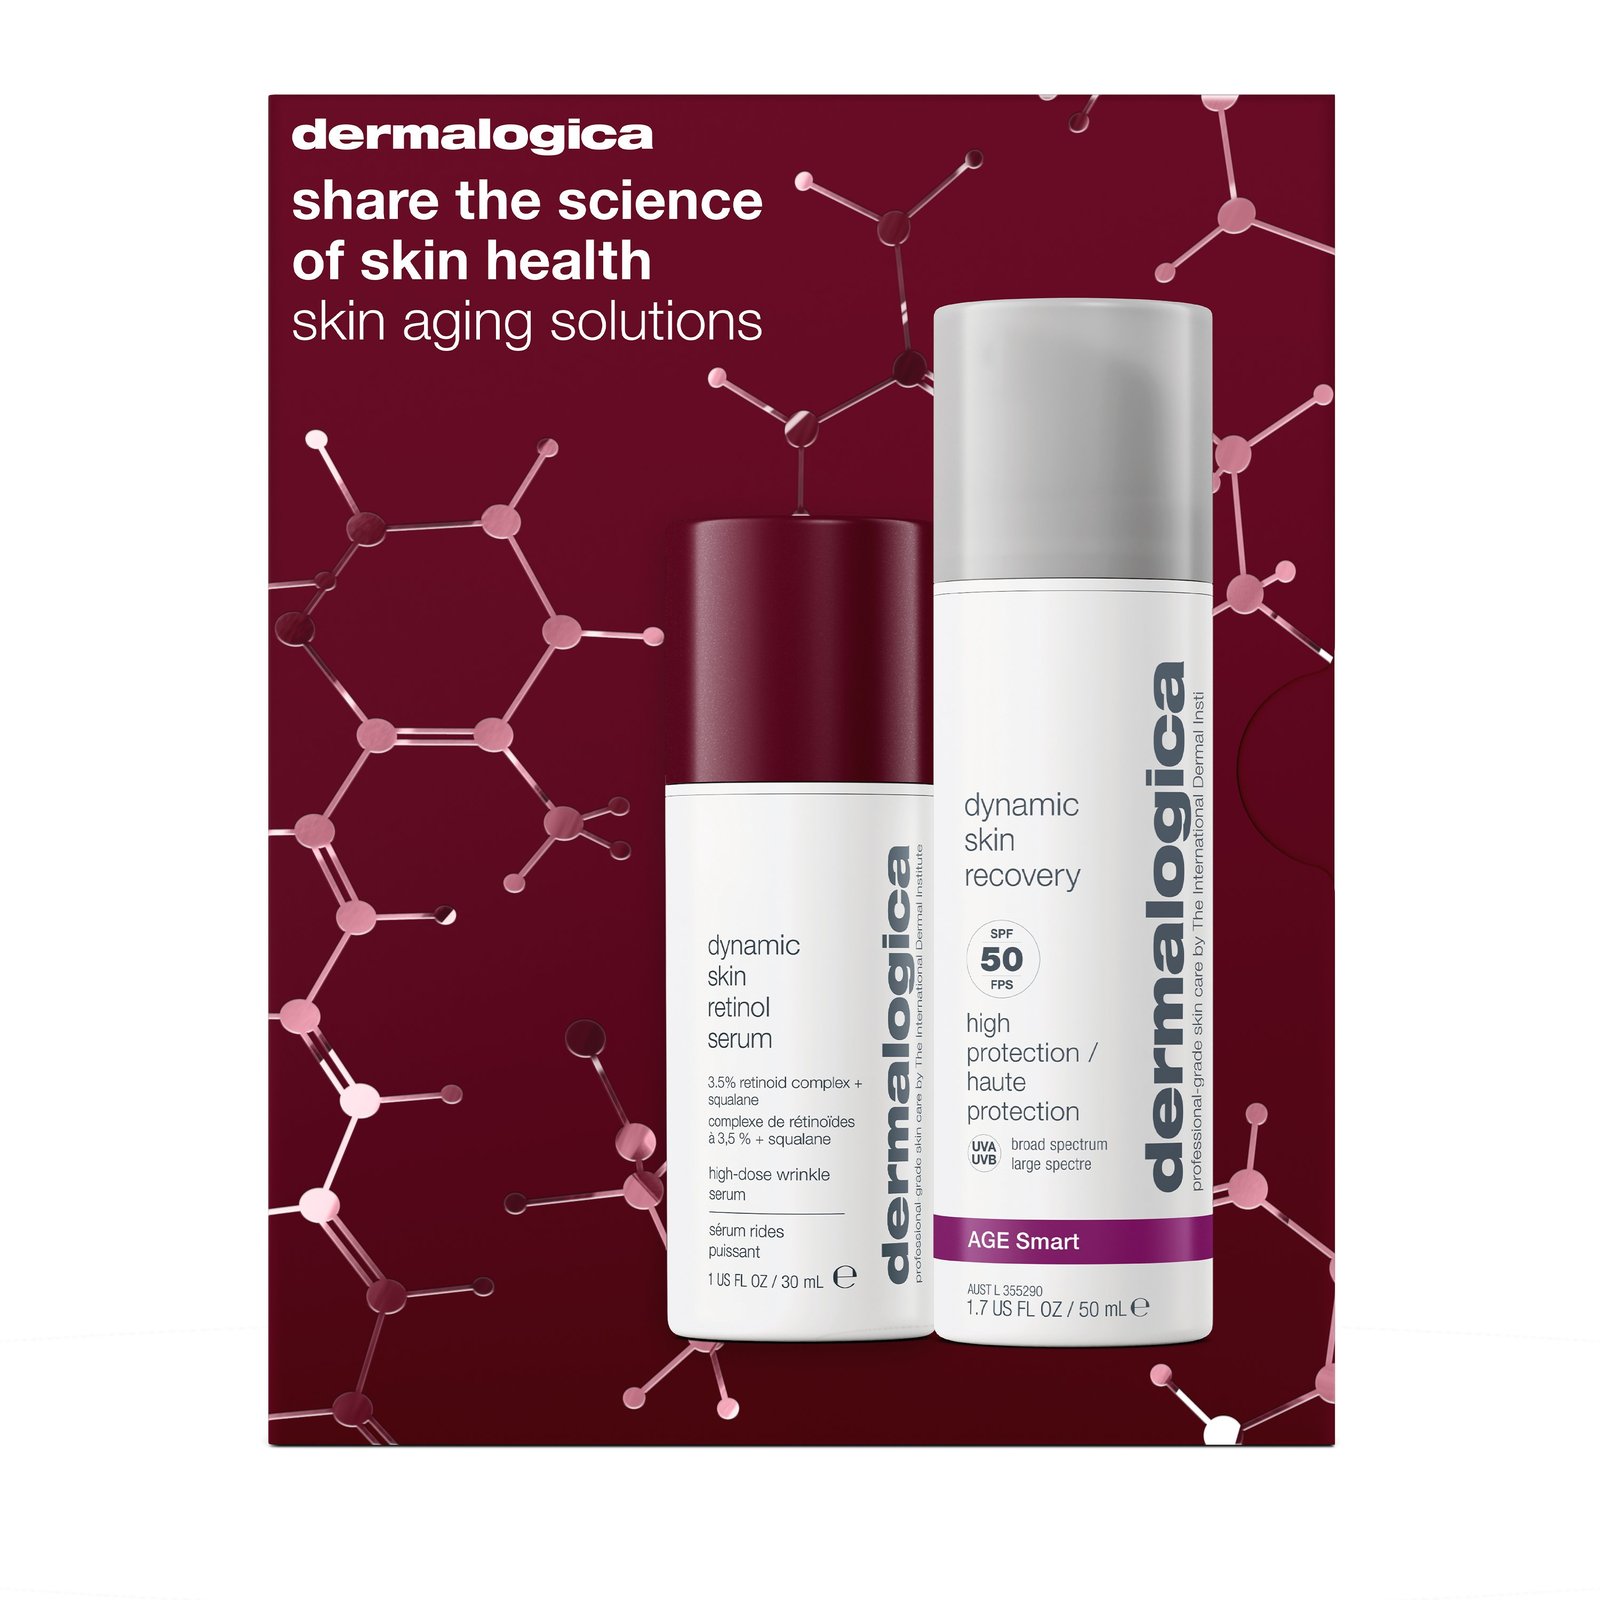 Dermalogica Skin Aging Solutions Kit